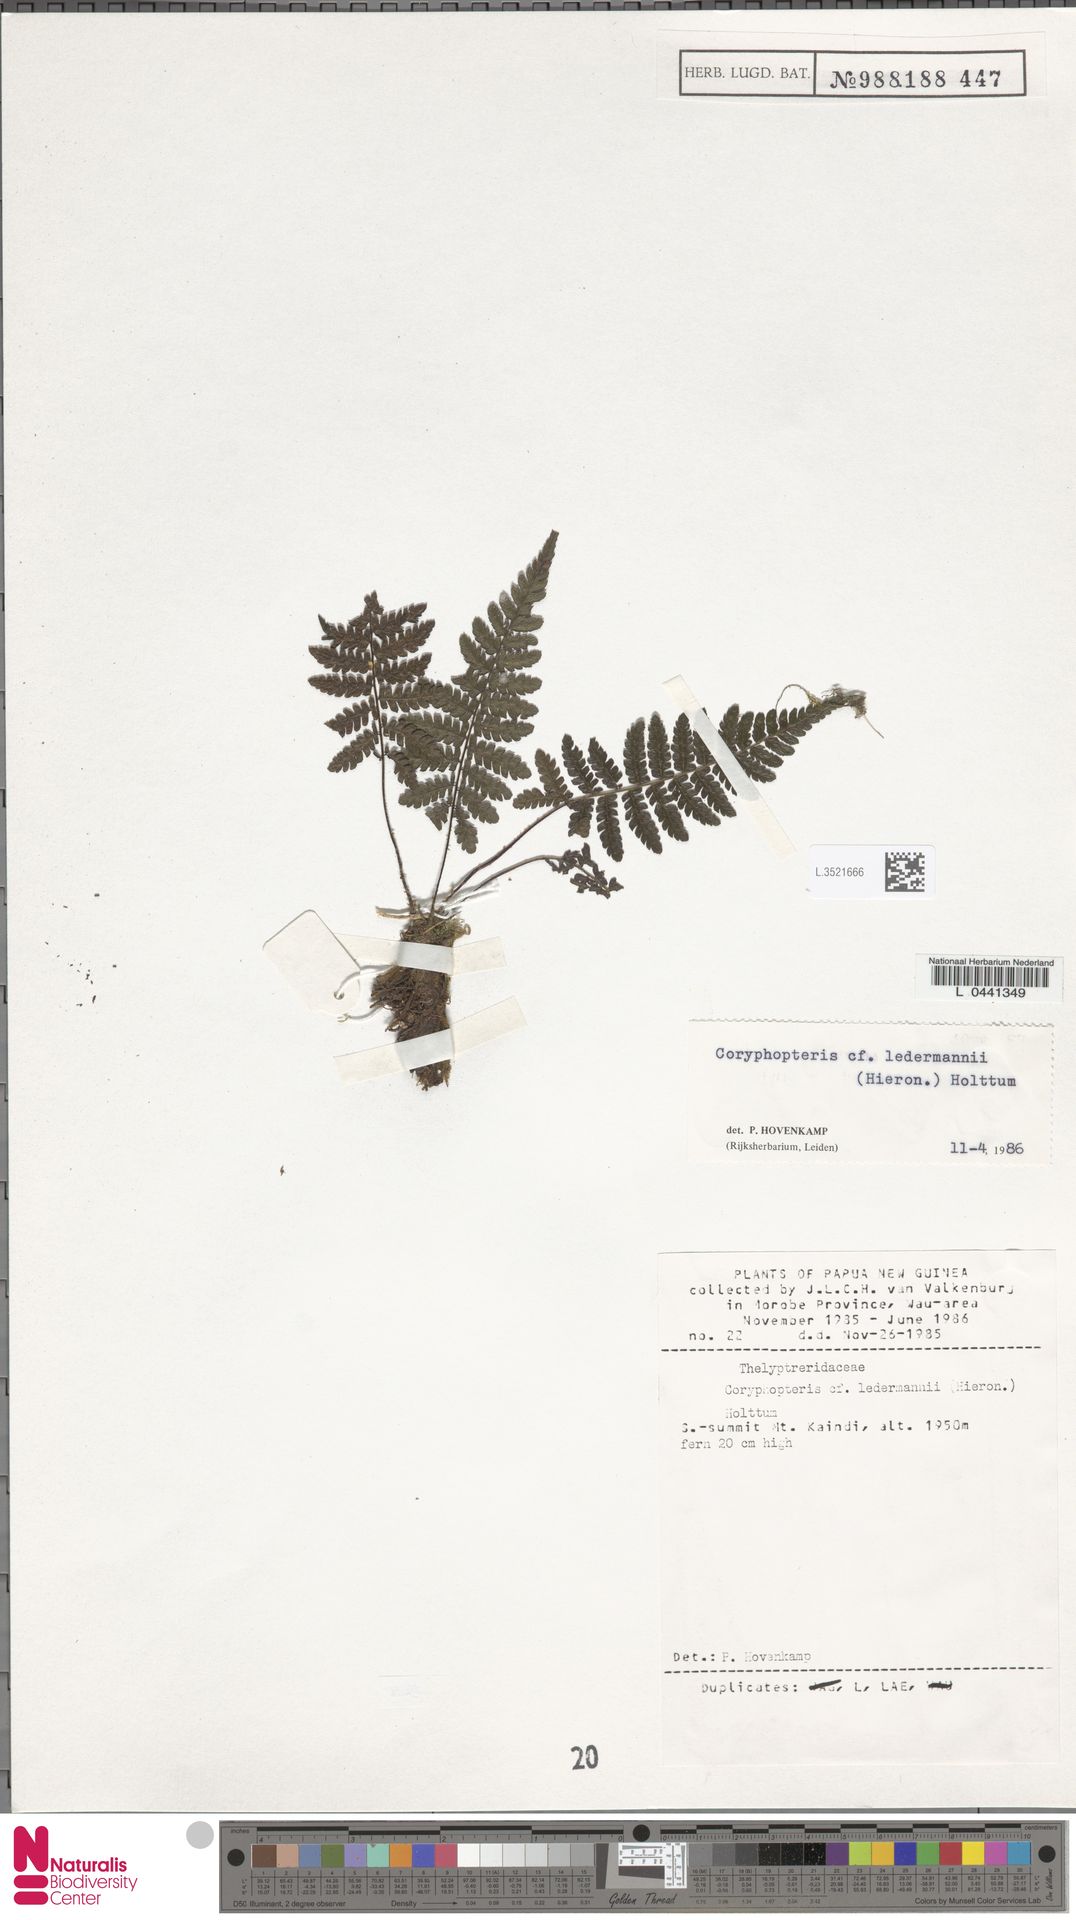 Coryphopteris ledermannii image